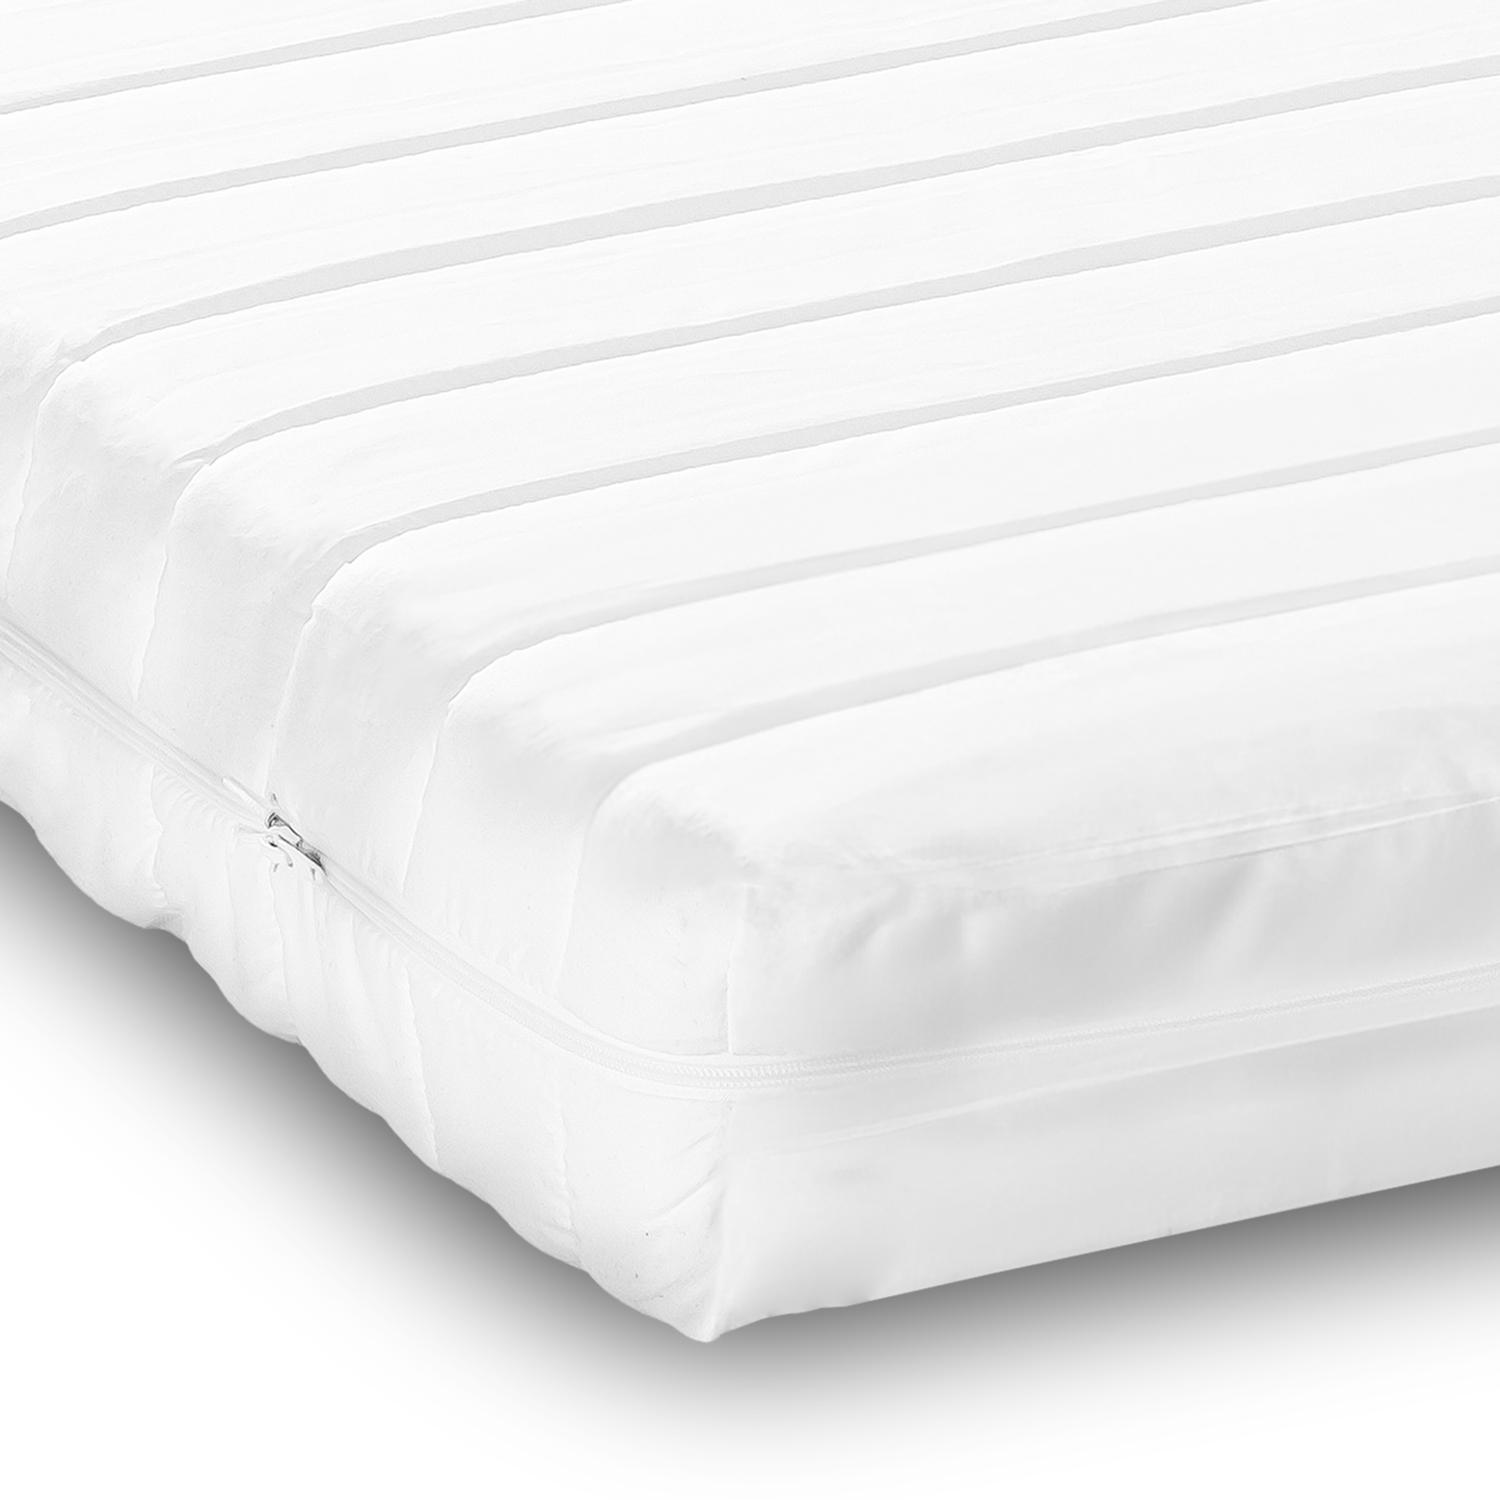 Cold foam mattress K16 140 x 190 cm, height 16 cm, firmness level H2/H3